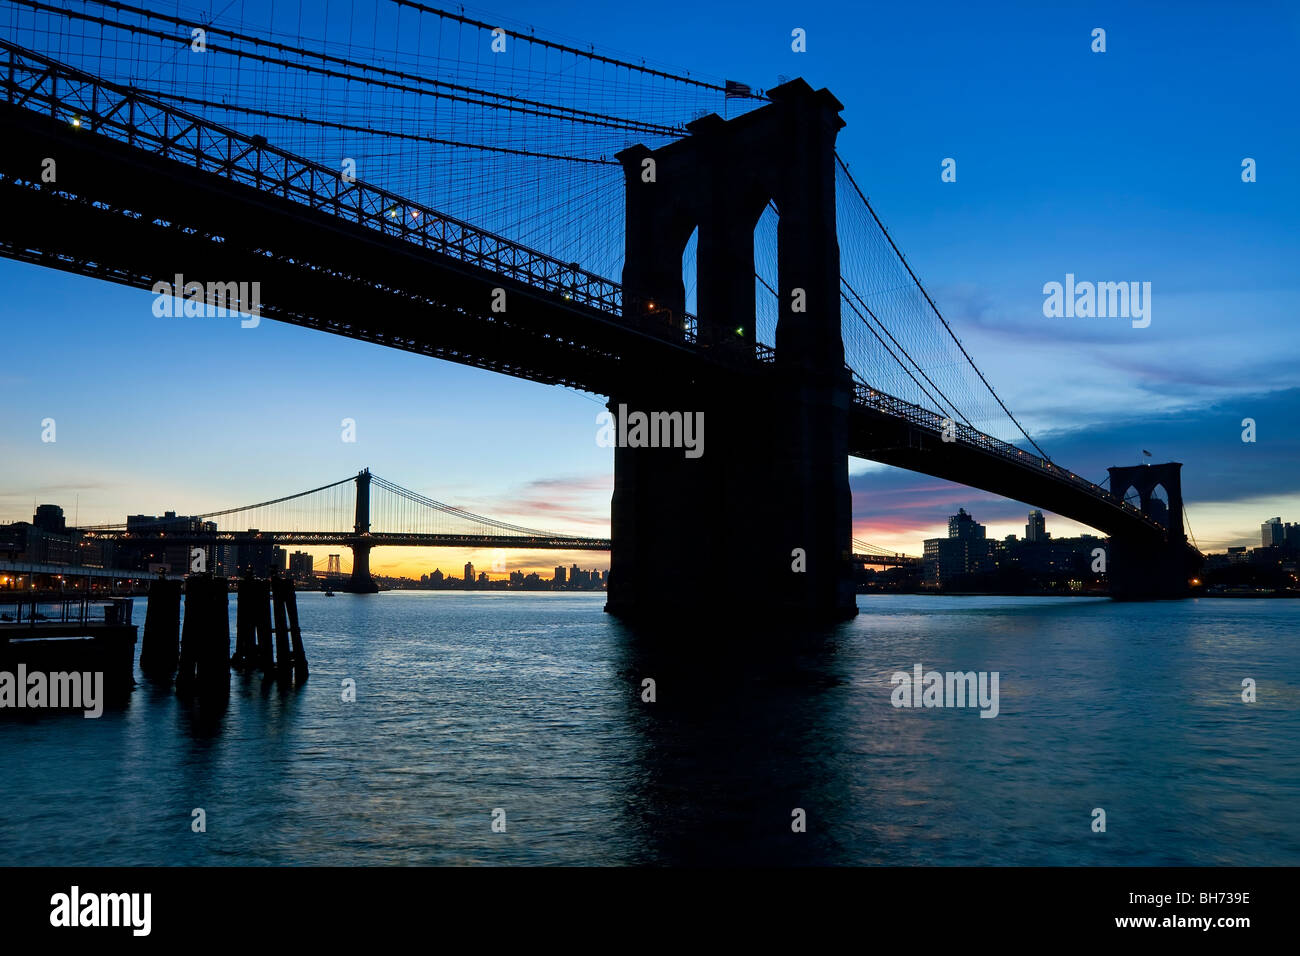 USA, New York City, Manhattan, The Brooklyn and Manhattan Bridges spanning the East River between Brooklyn and Manhanttan Stock Photo